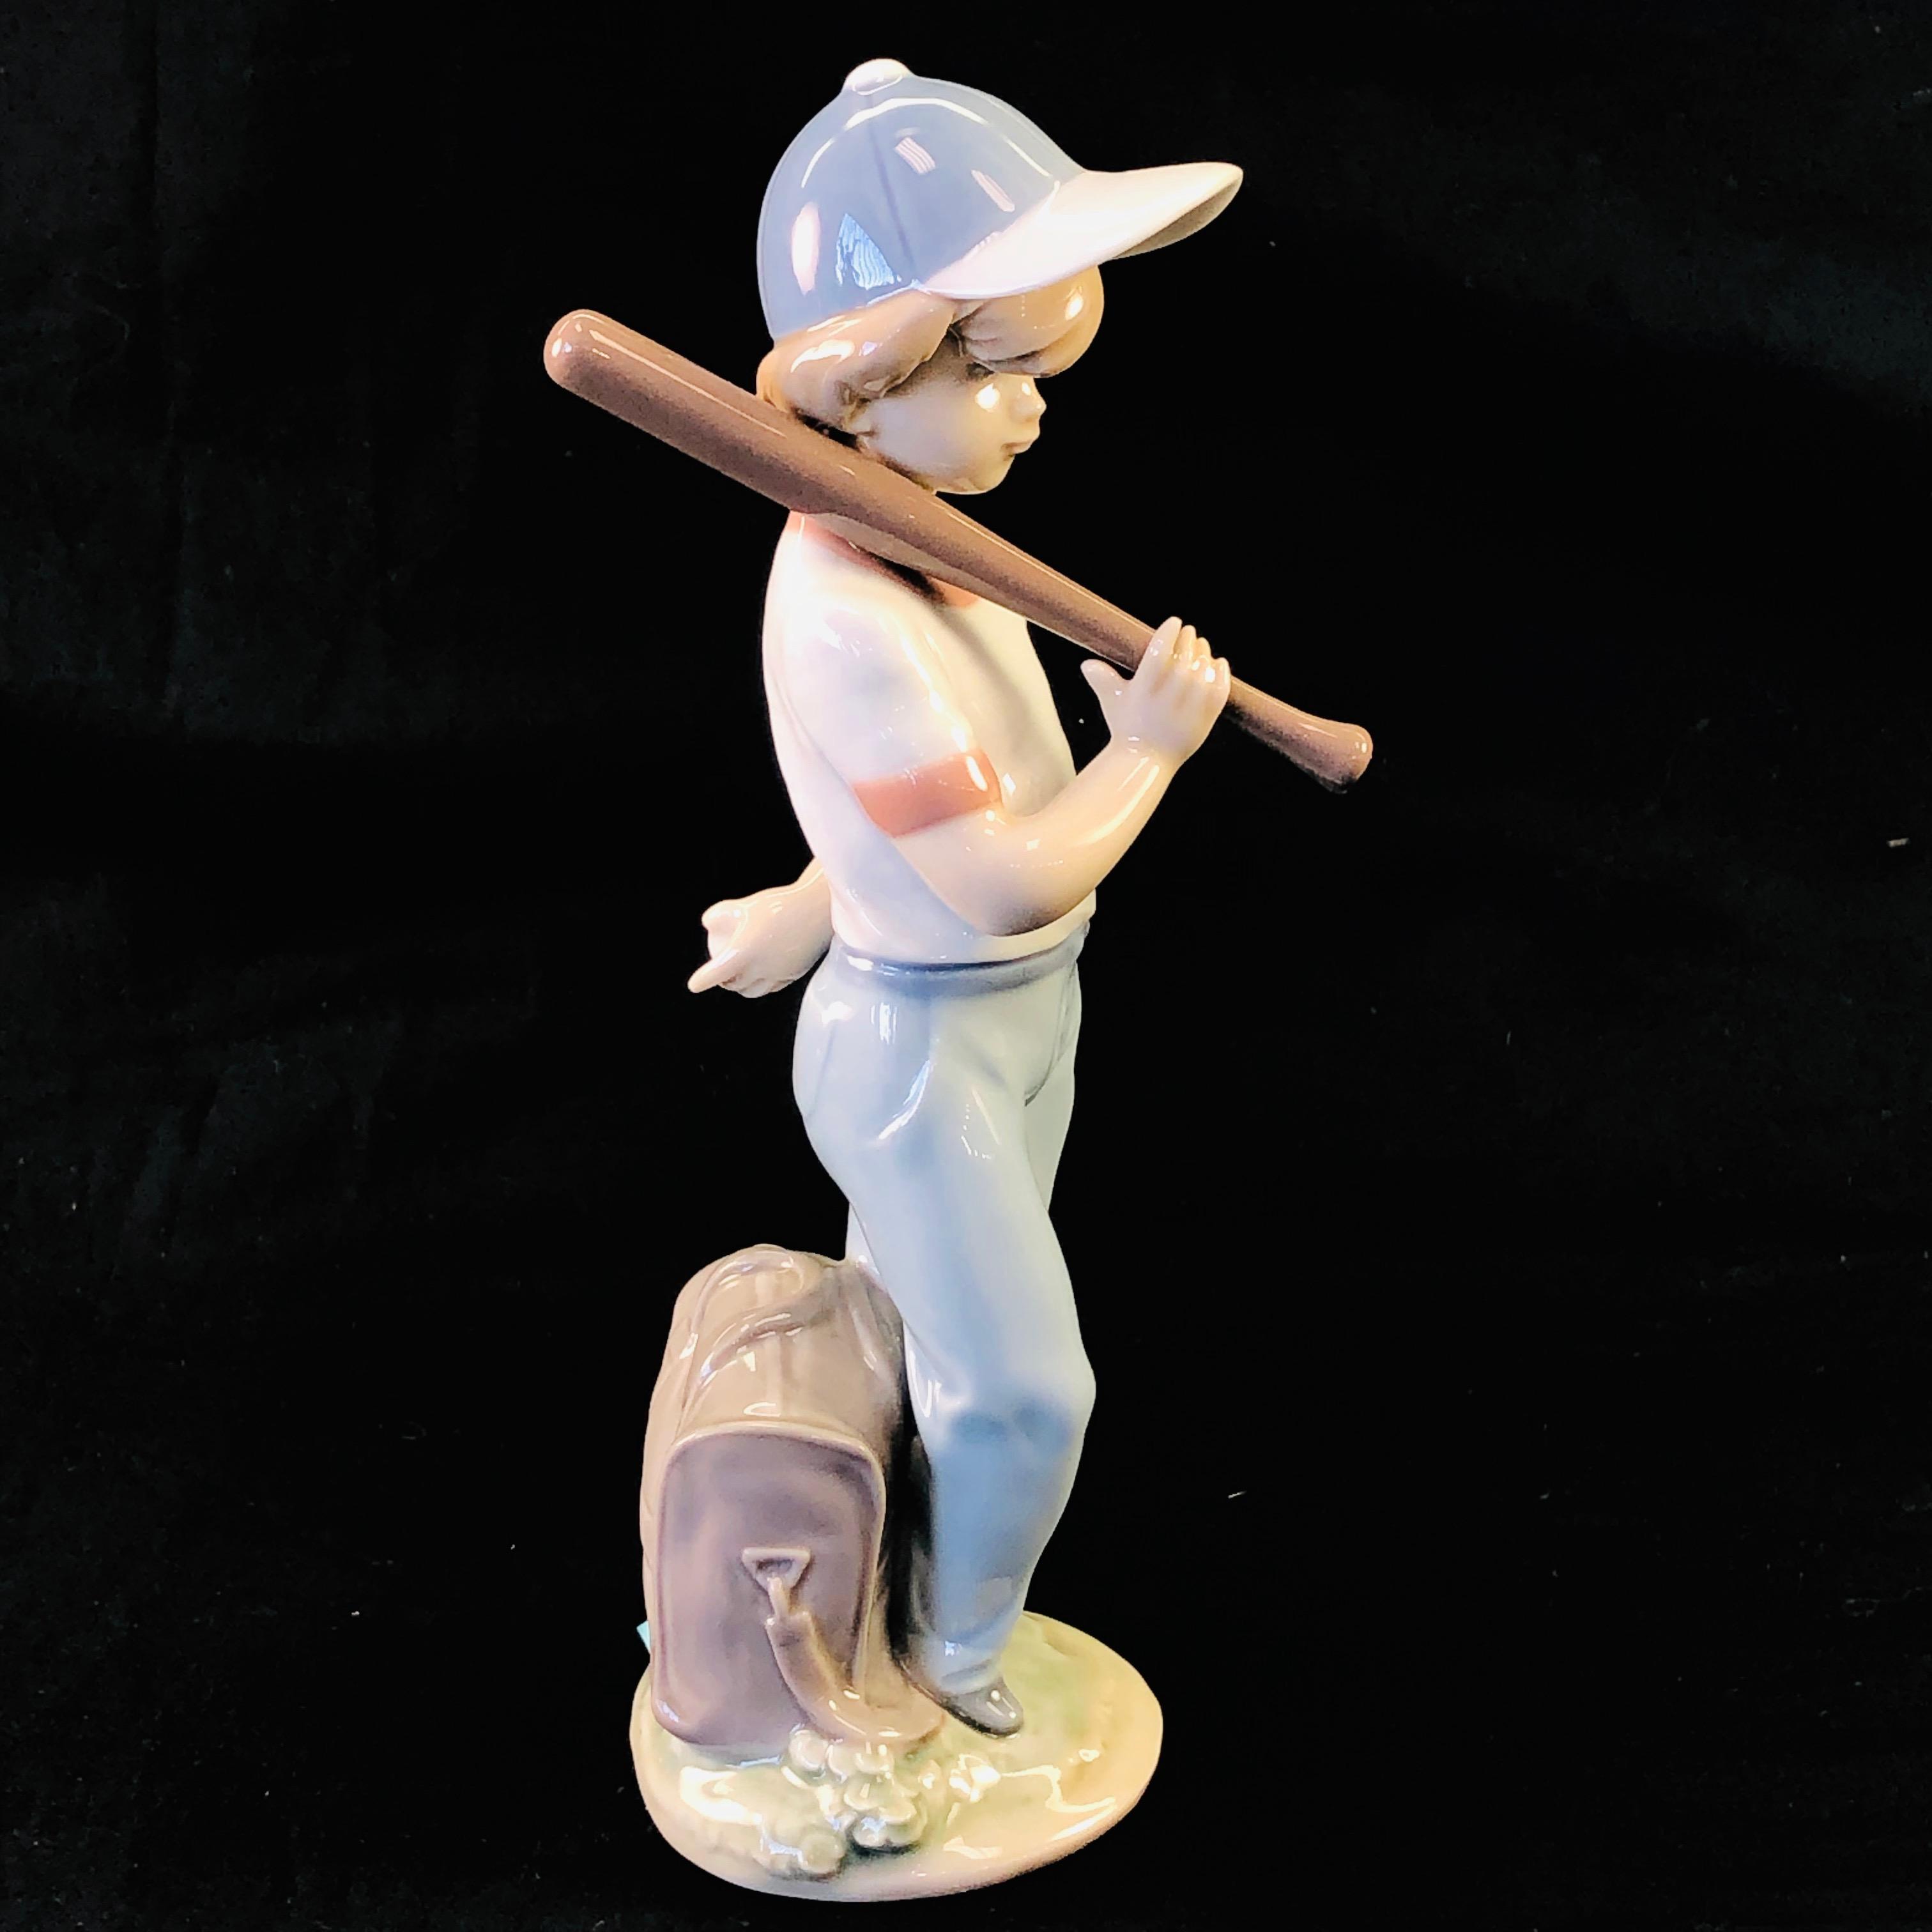 Estate Lladro #7610 "Can I Play?" porcelain figurine with original box